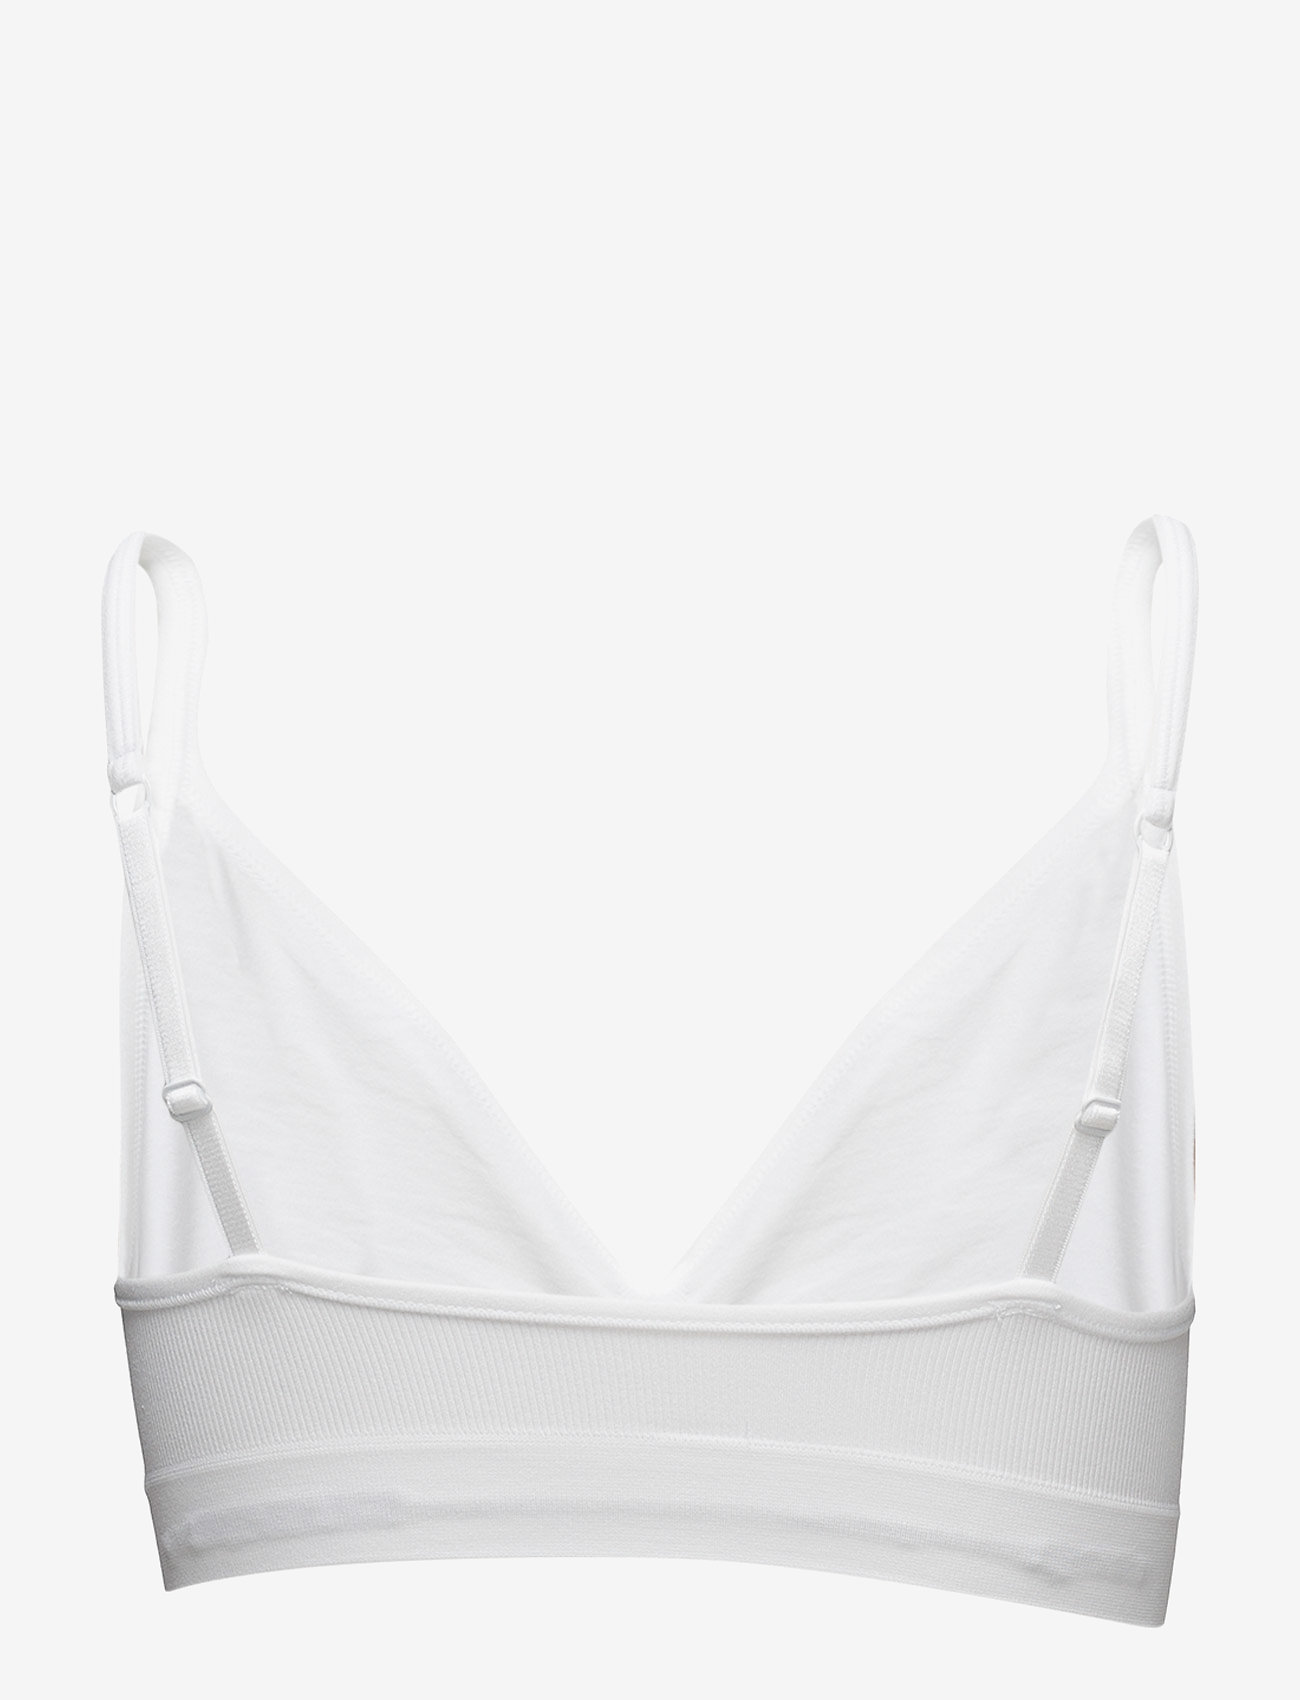 Missya - Lucia bra top - tank top bras - white - 1